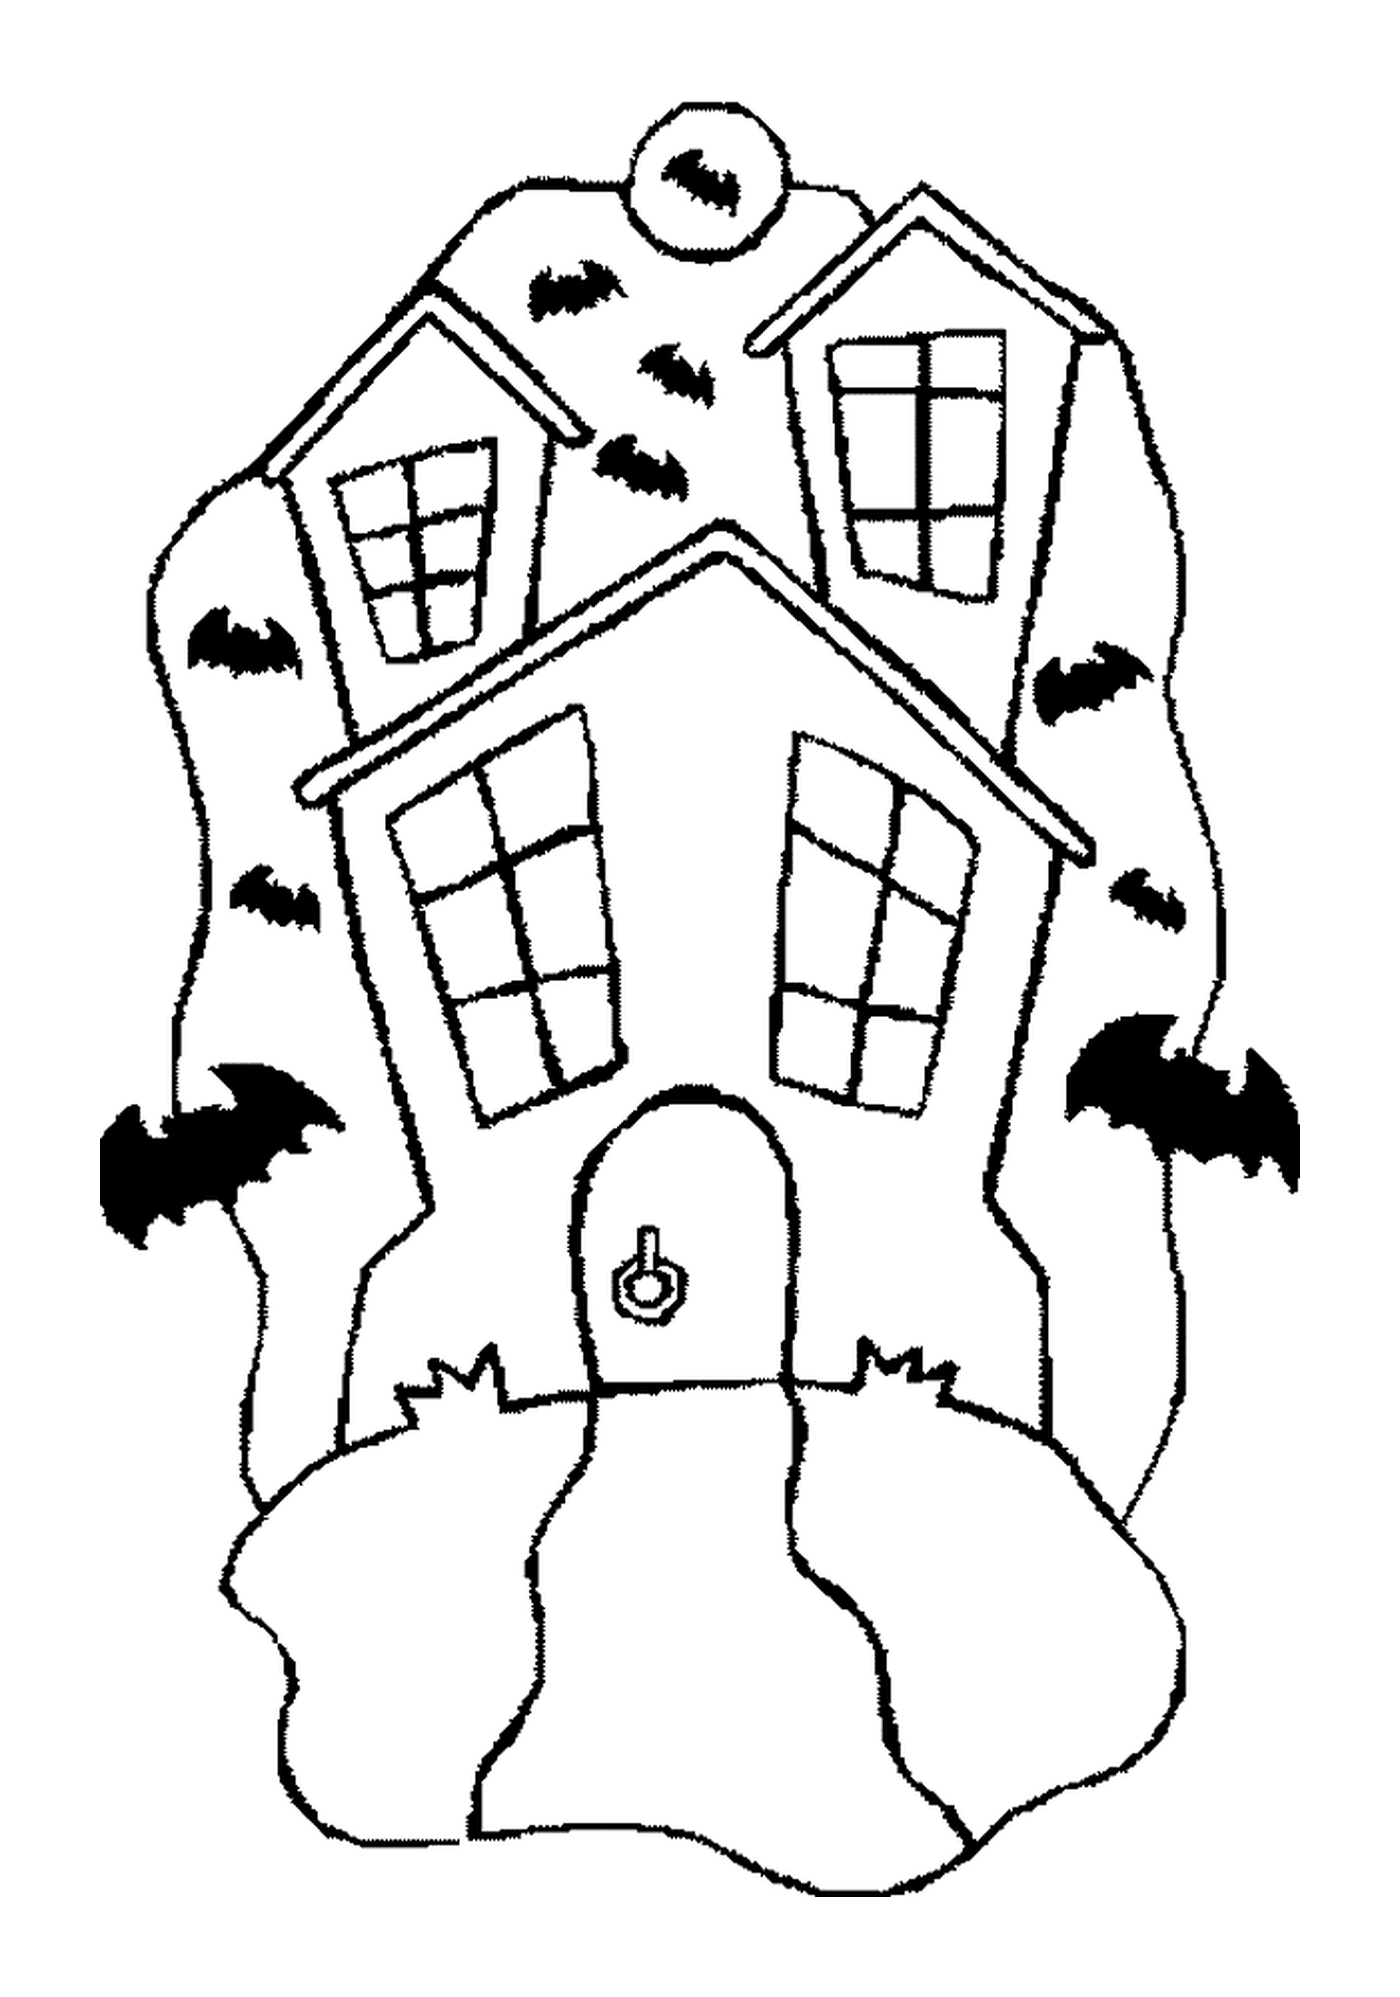  Una casa embrujada de murciélagos 